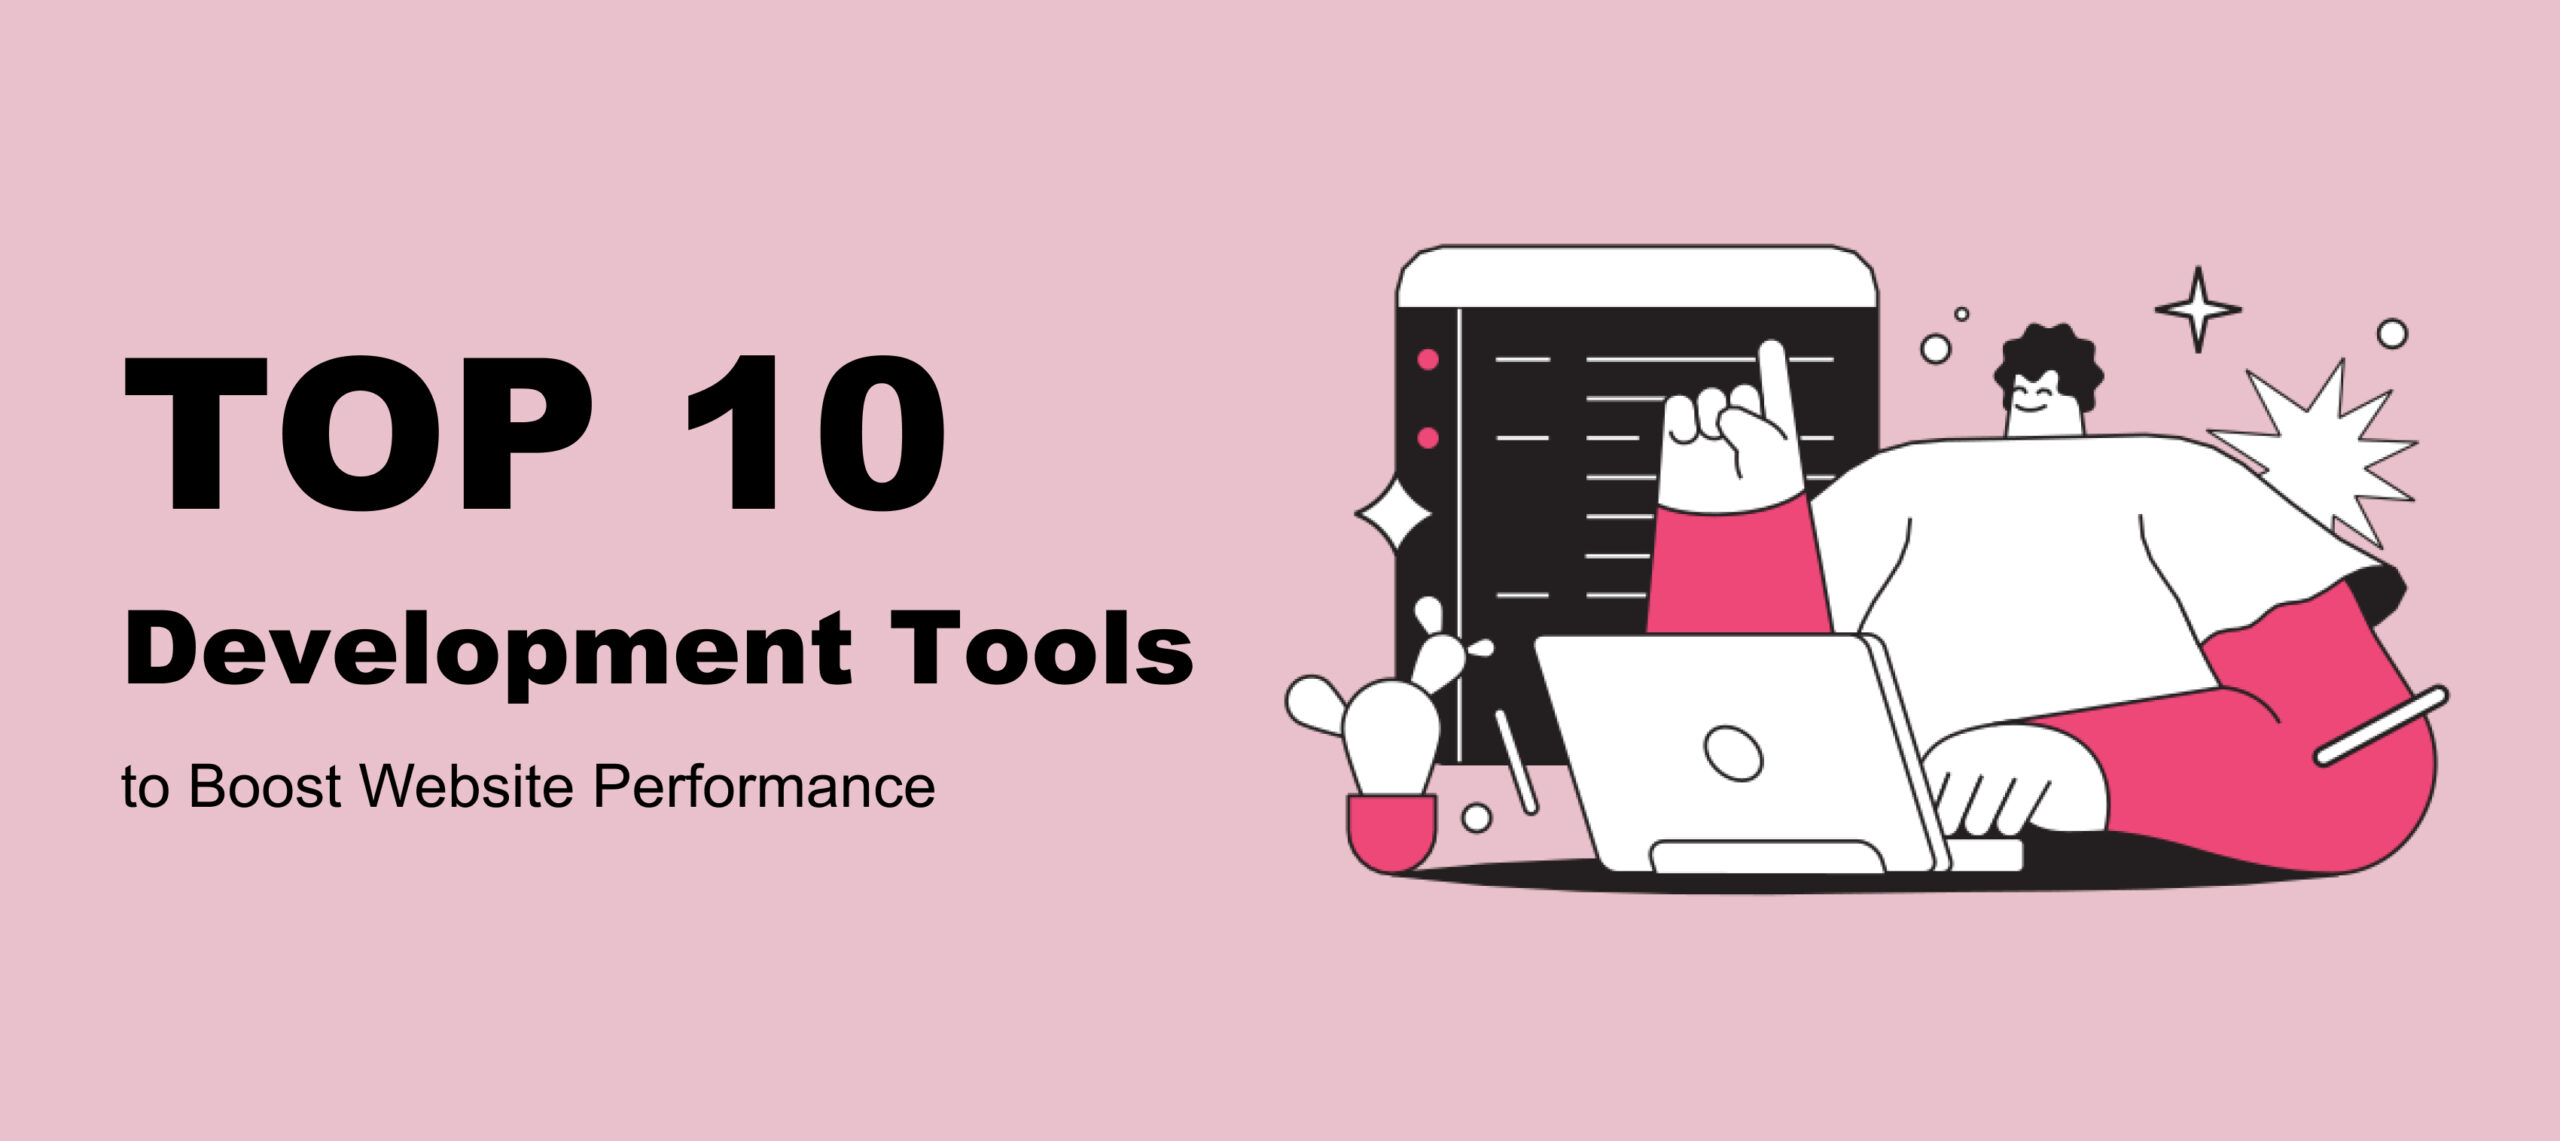  Top 10 Development Tools to Boost Website Performance